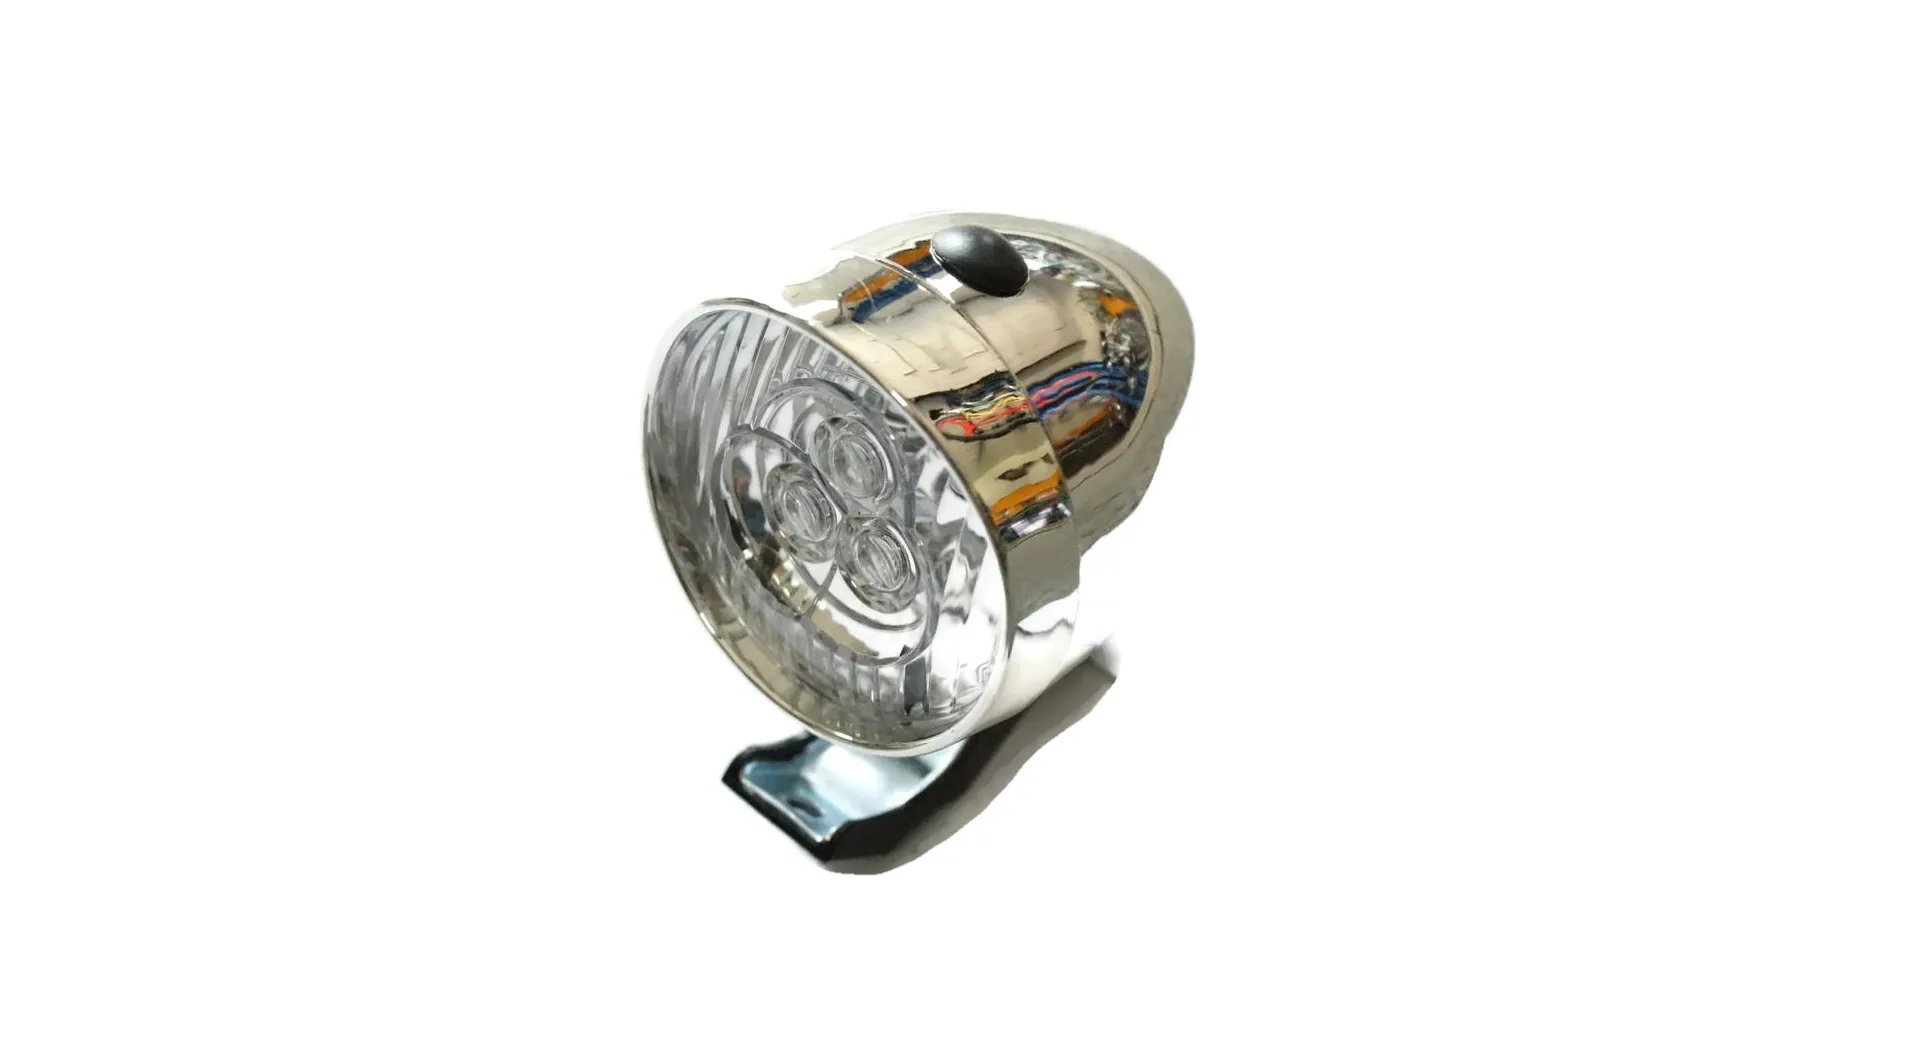 Lampa rowerowa Nexelo przód 3 LED retro+wspornik